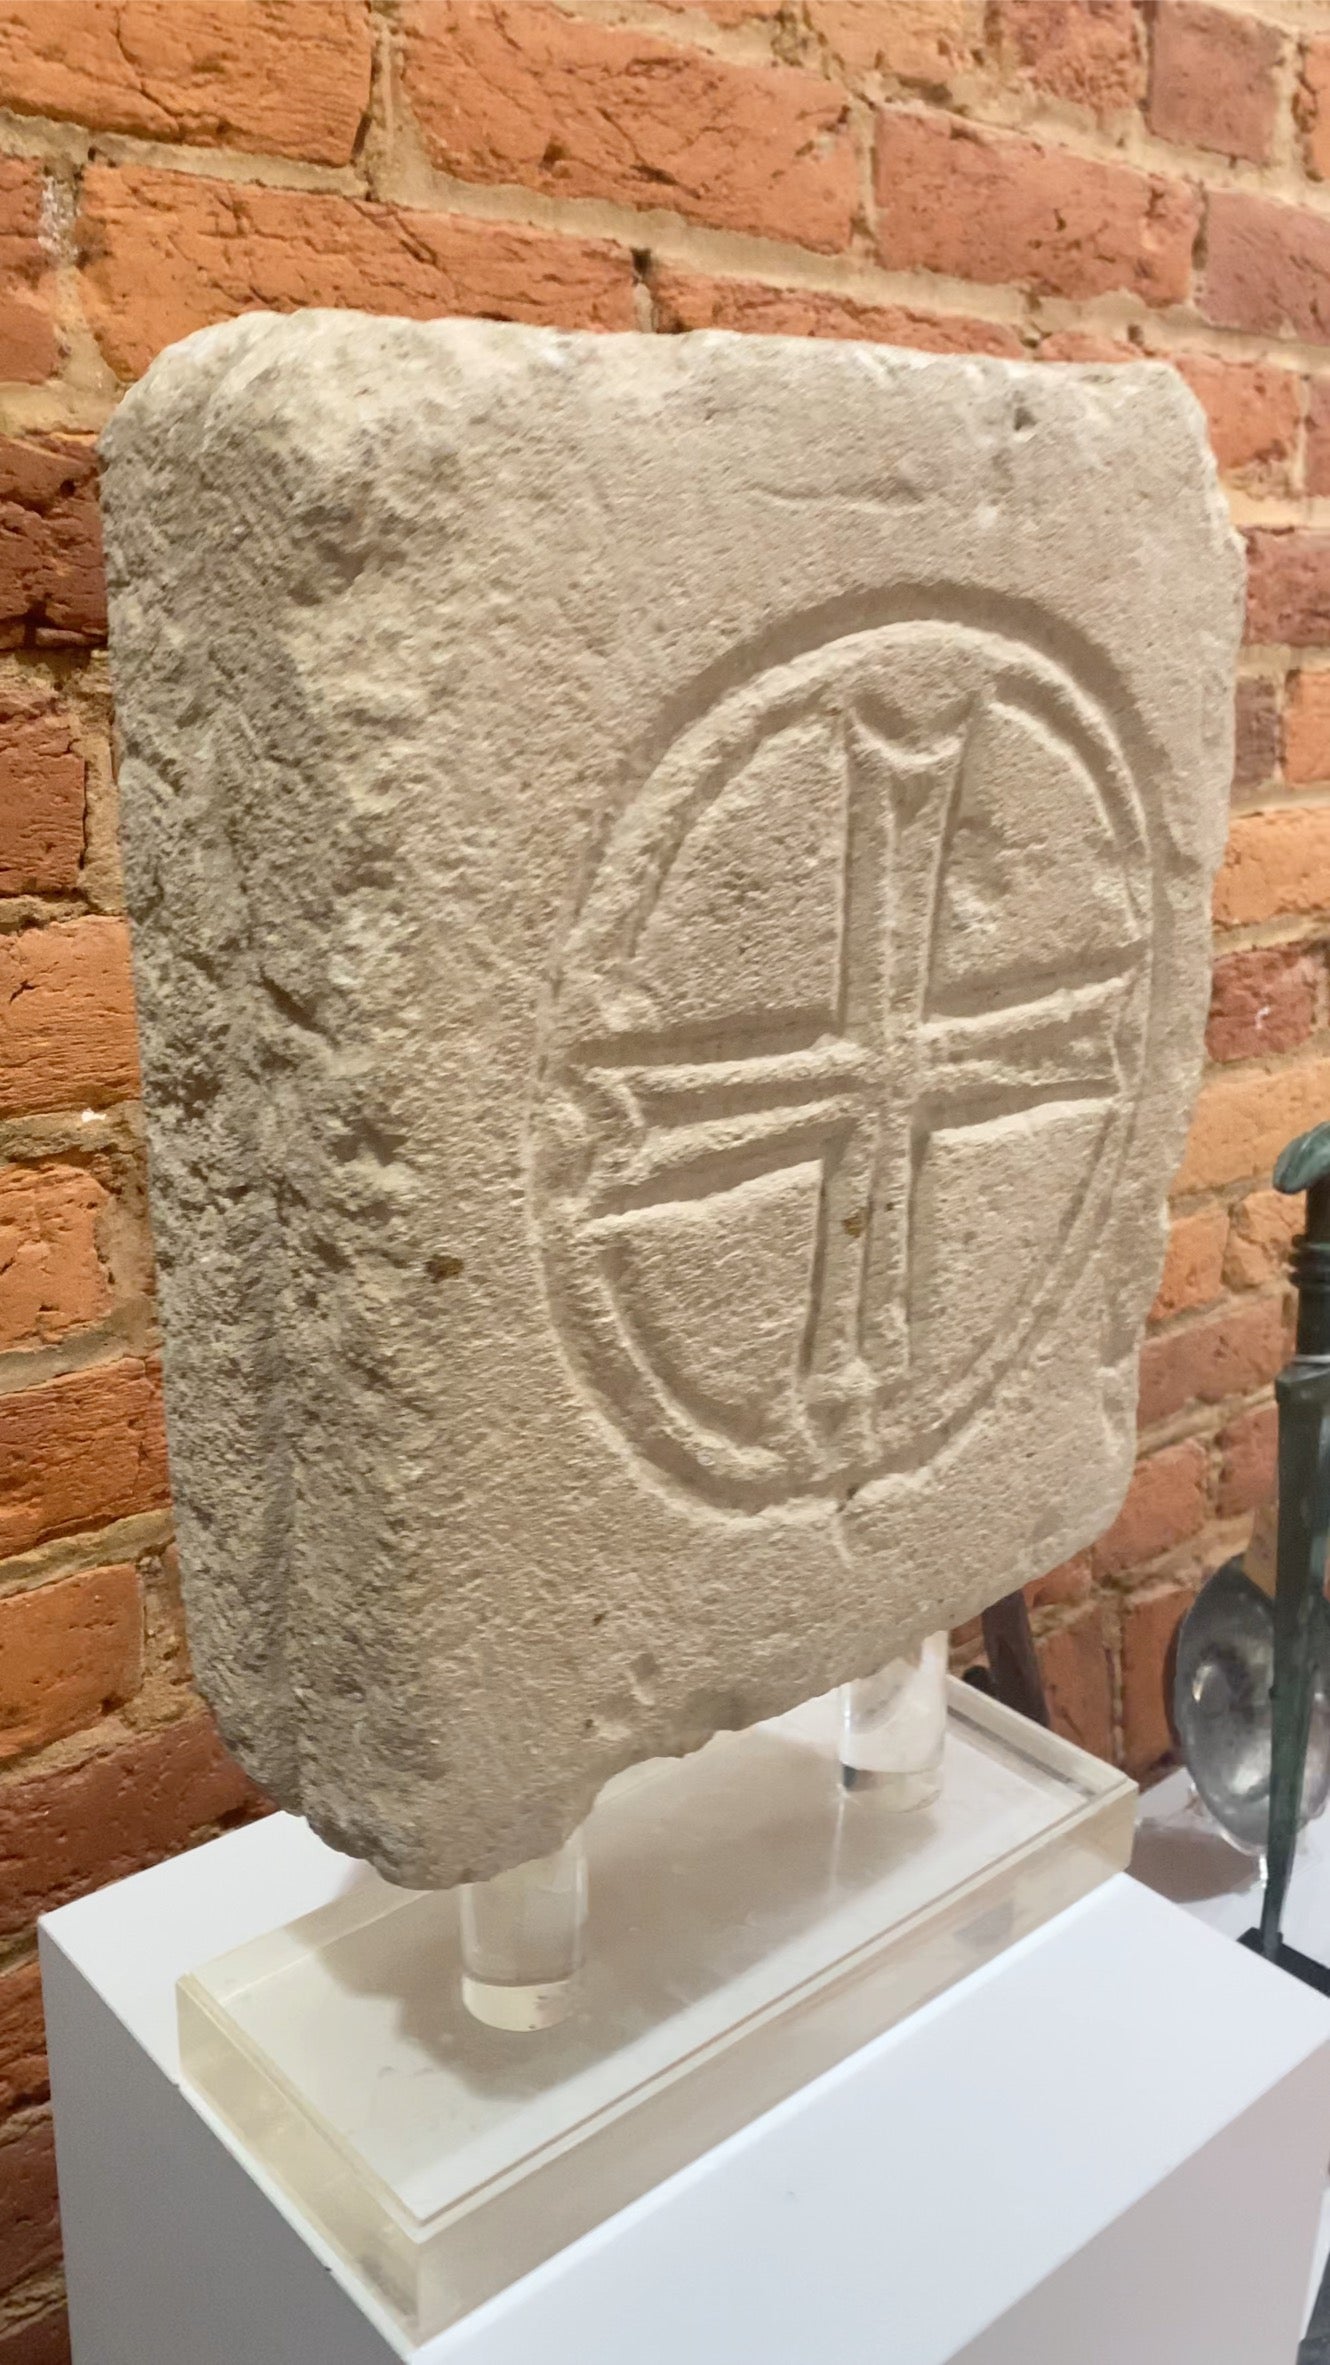 A large Coptic/Byzantine Sandstone Stele, ca. 6th - 7th century CE